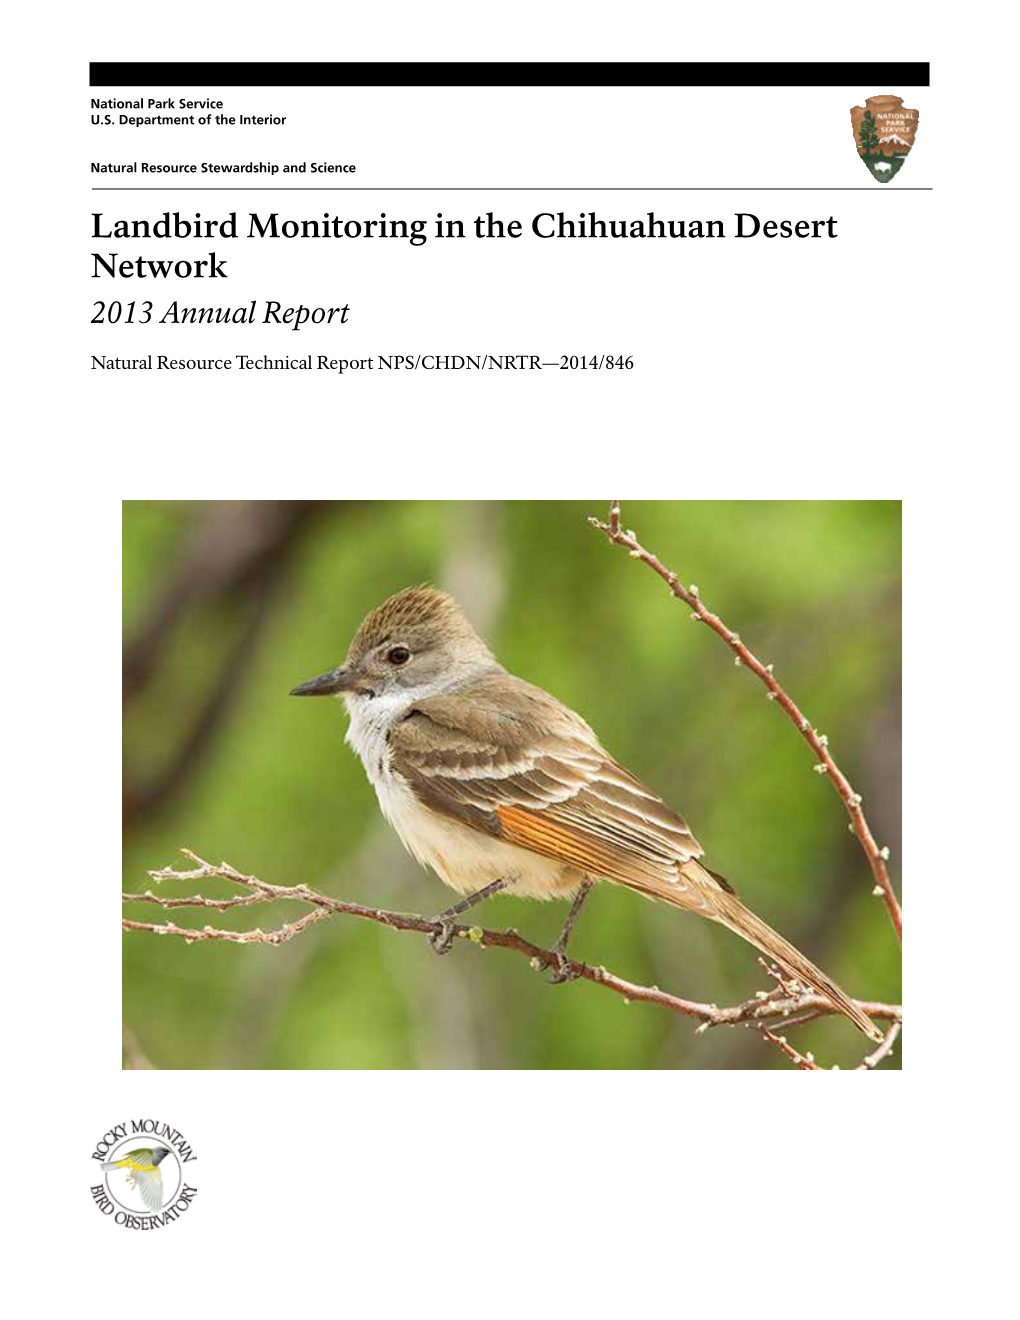 Landbird Monitoring in the Chihuahuan Desert Network 2013 Annual Report